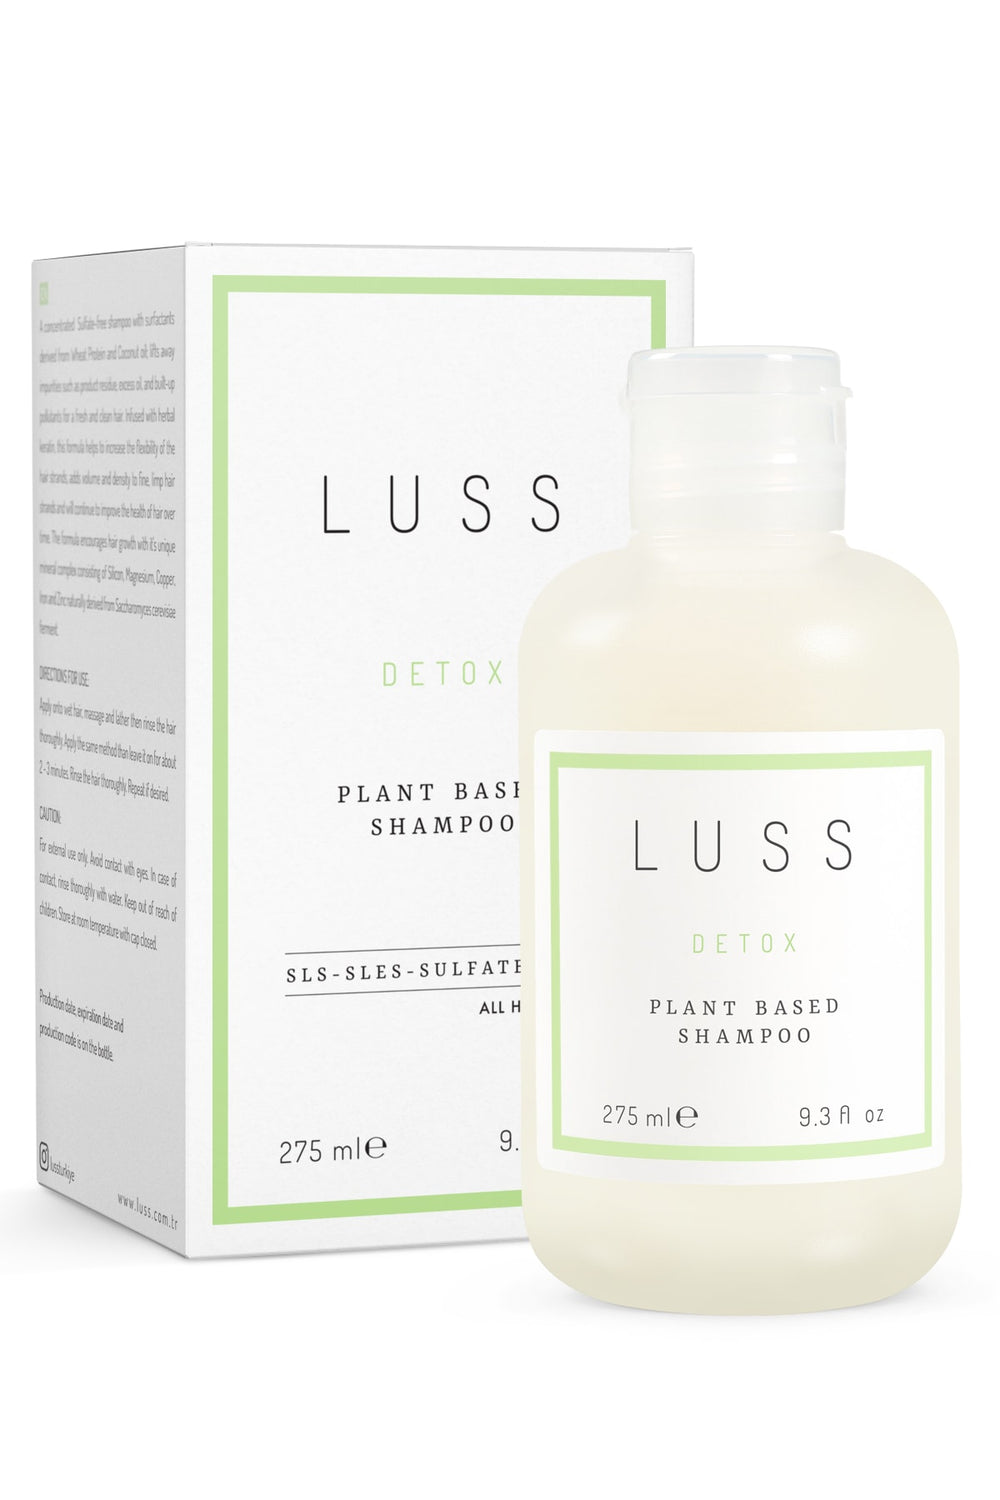 Luss Detox Plant Based Shampoo Sls-sles Sulfate 275 ml Free Şampuan